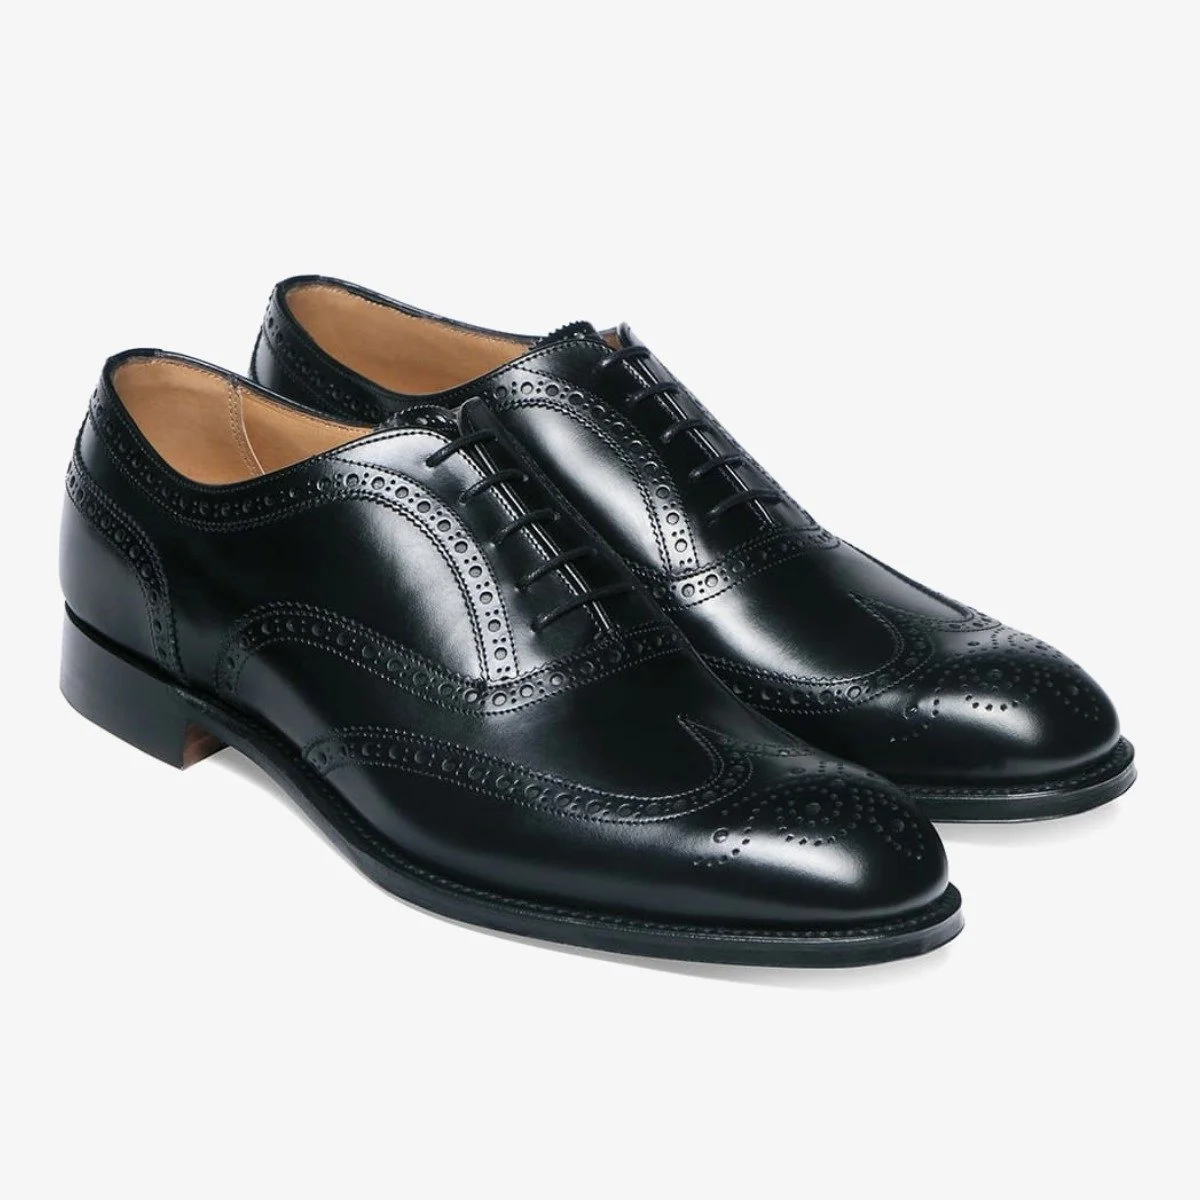 Cheaney Arthur III black brogue men's oxford shoes